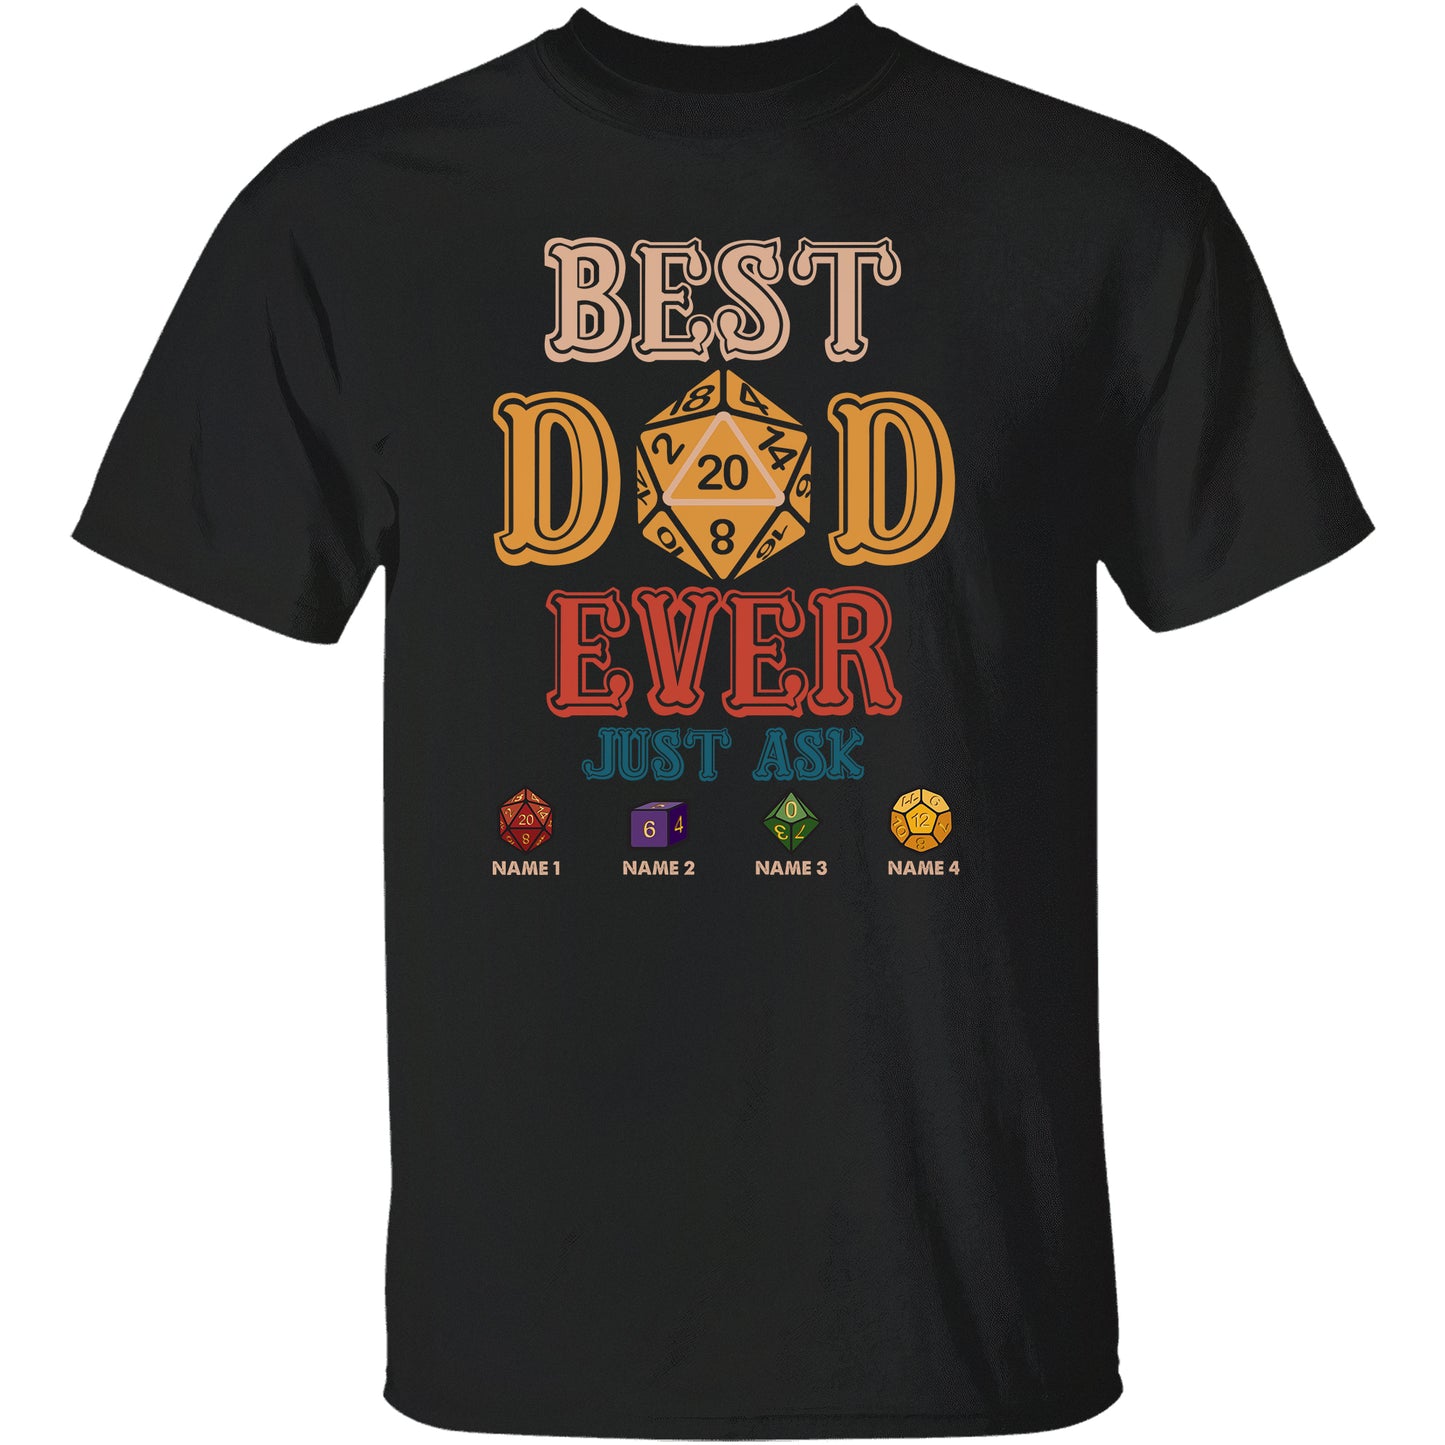 Best Dad Ever Just Ask DnD Game Geeky Shirt-Macorner